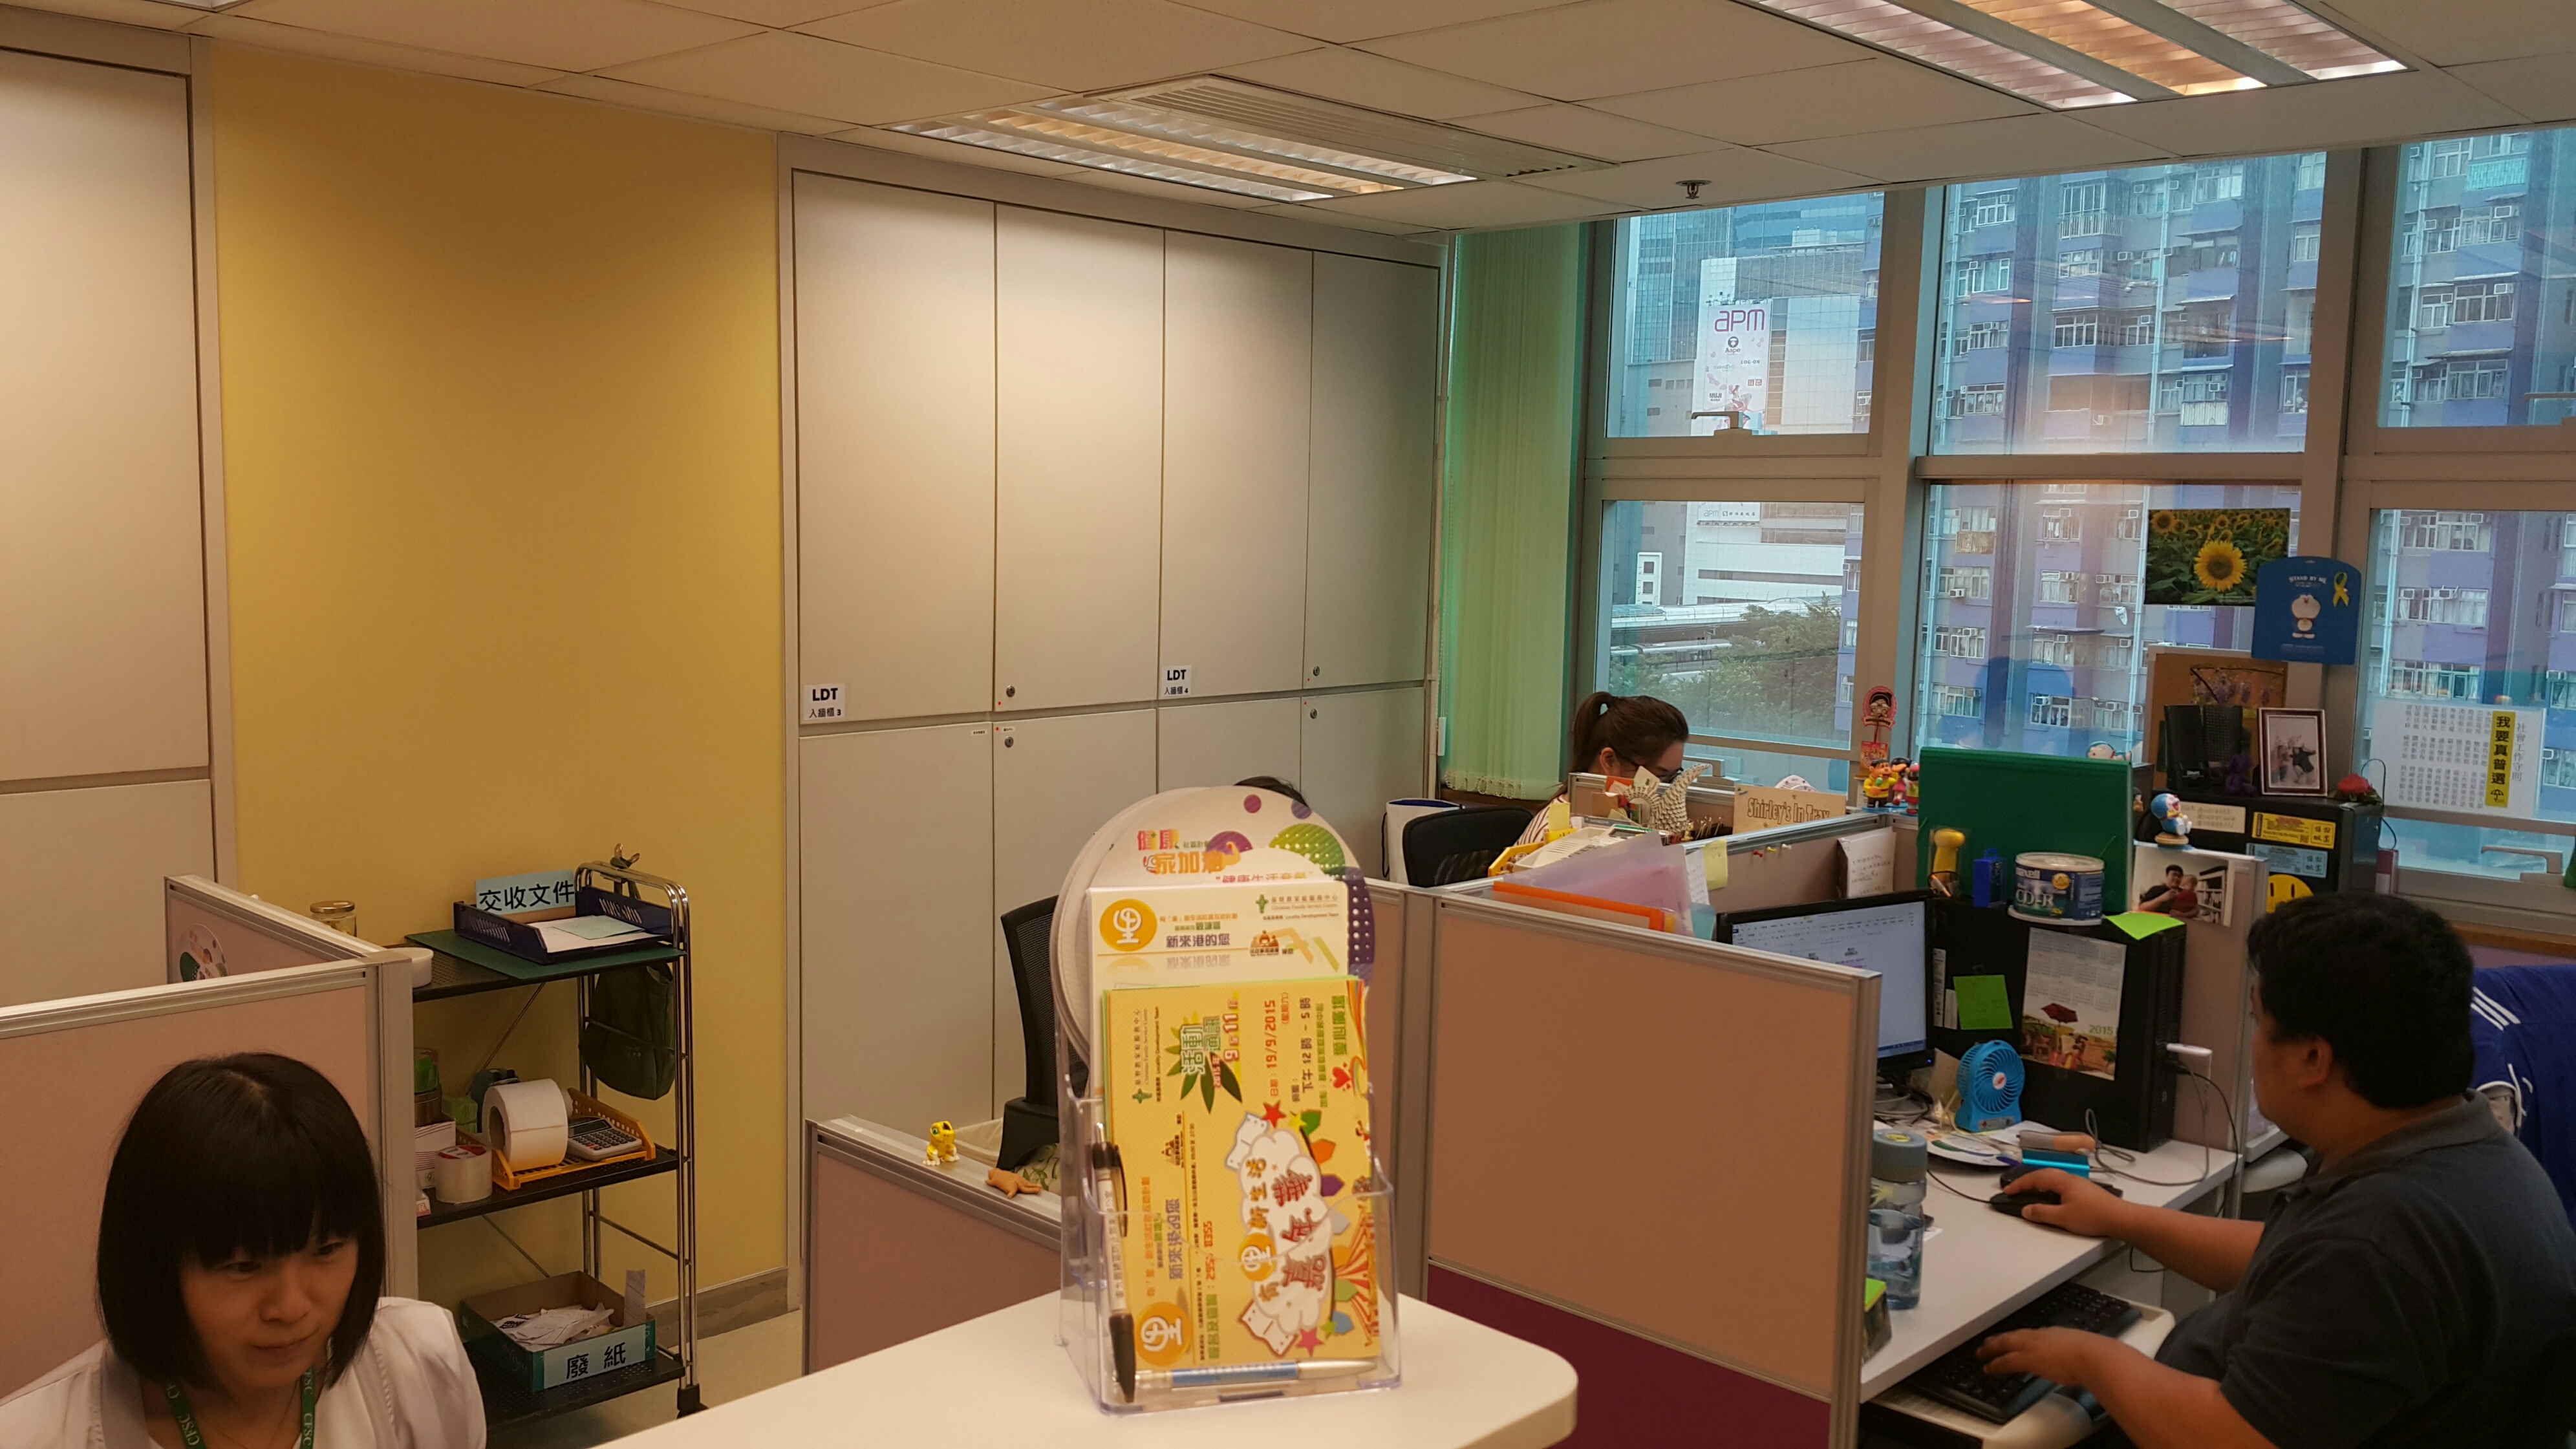 Locality Development Team Office Interior Environment Photo